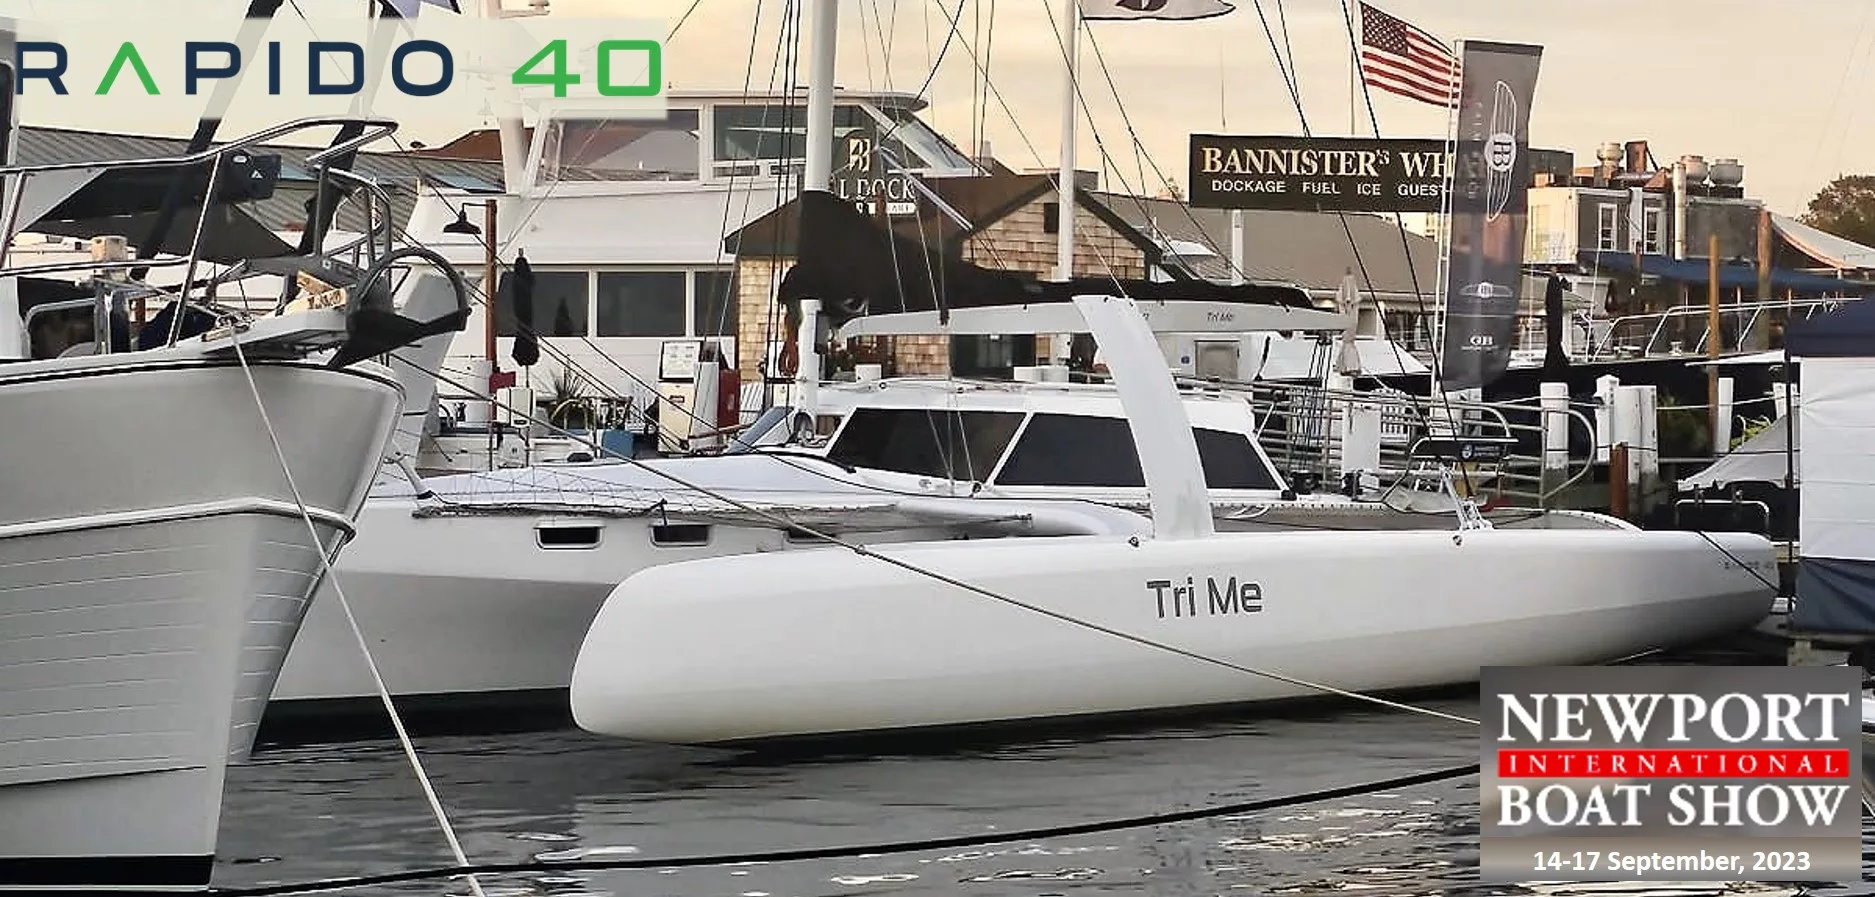 Rapido 40 at Newport Boat Show, Rhode Island, USA; 14-17 September 2023